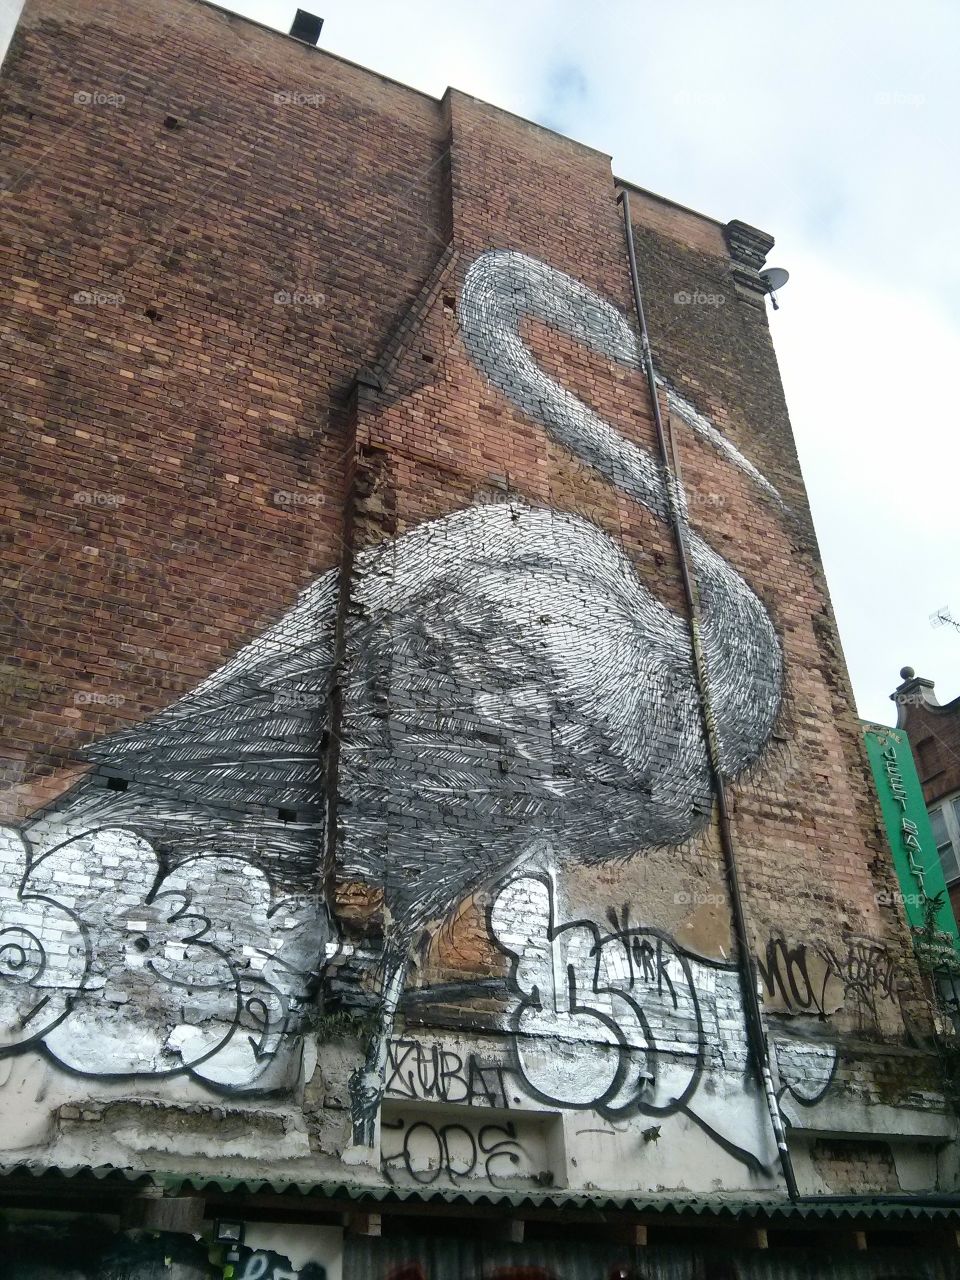 Street art, London